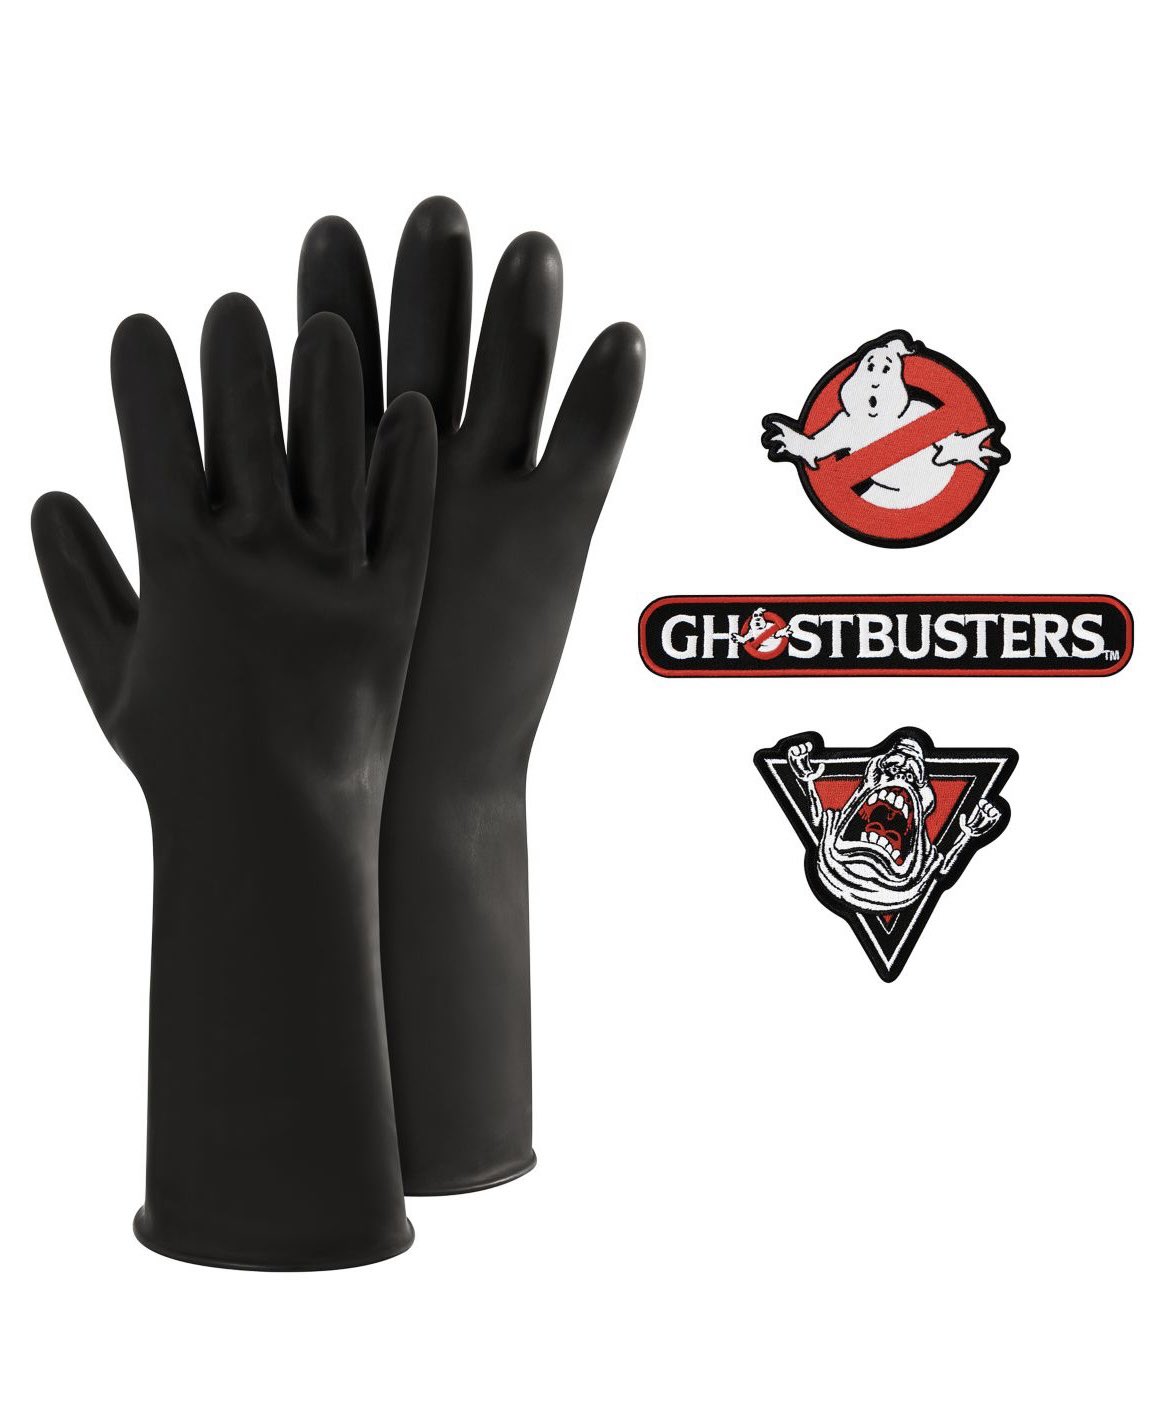 ¡Dale un vistazo al Ghostbusters Proton Pack de Spirit Halloween! 21